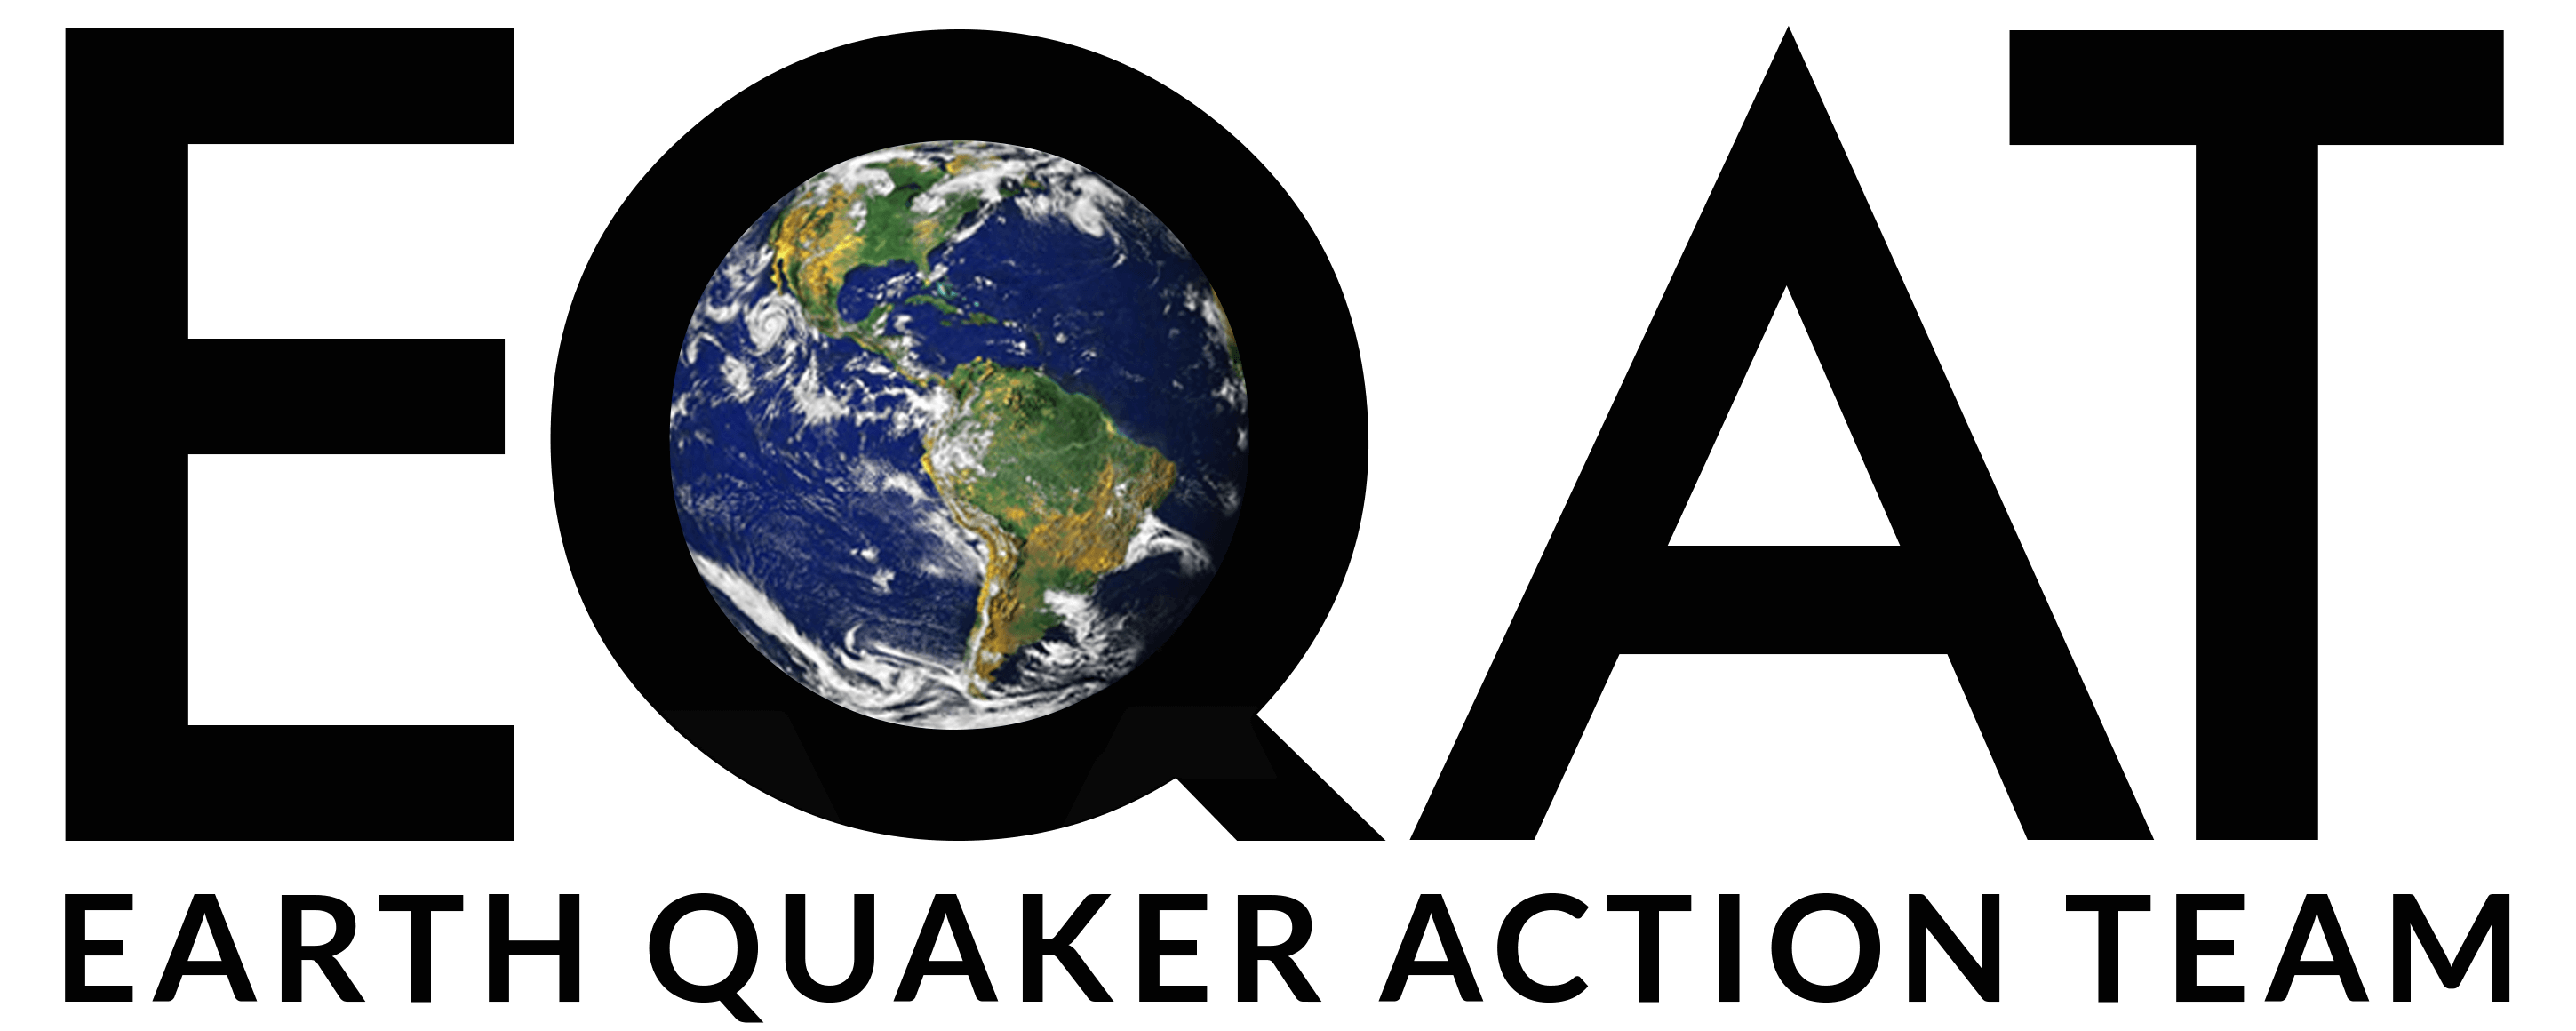 EQAT — Earth Quaker Action Team